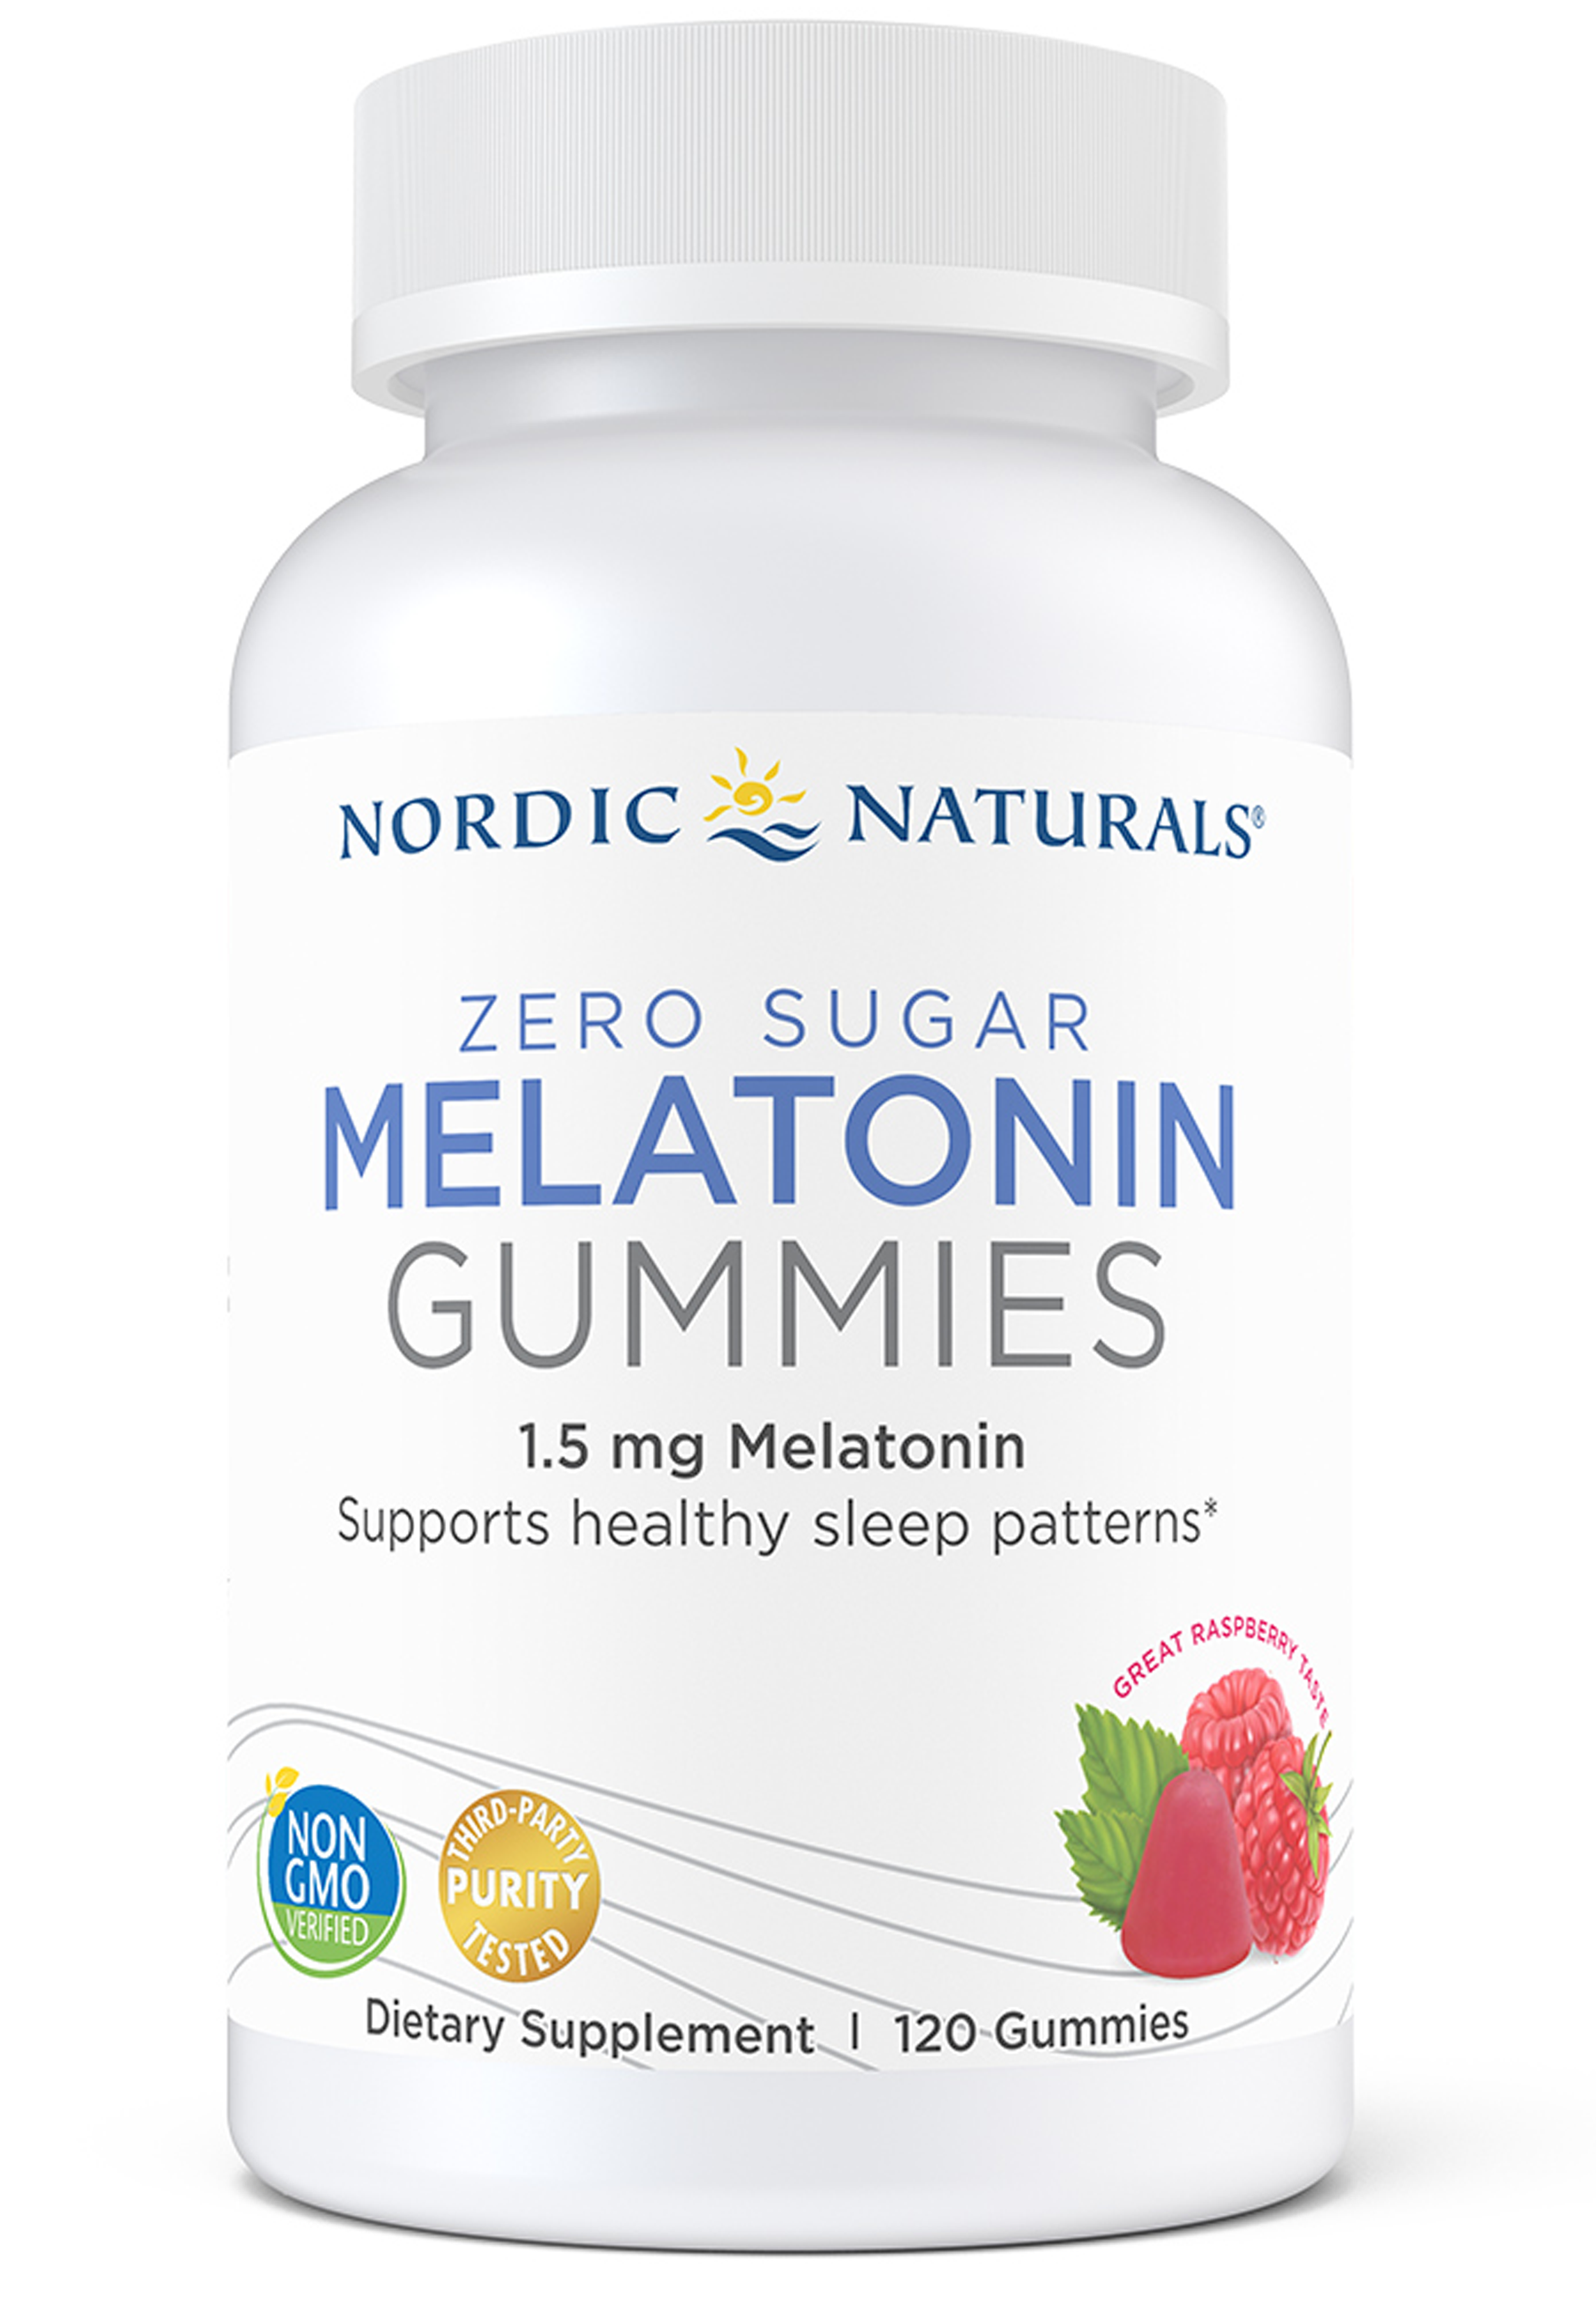 Nordic Naturals Zero Sugar Melatonin Gummies